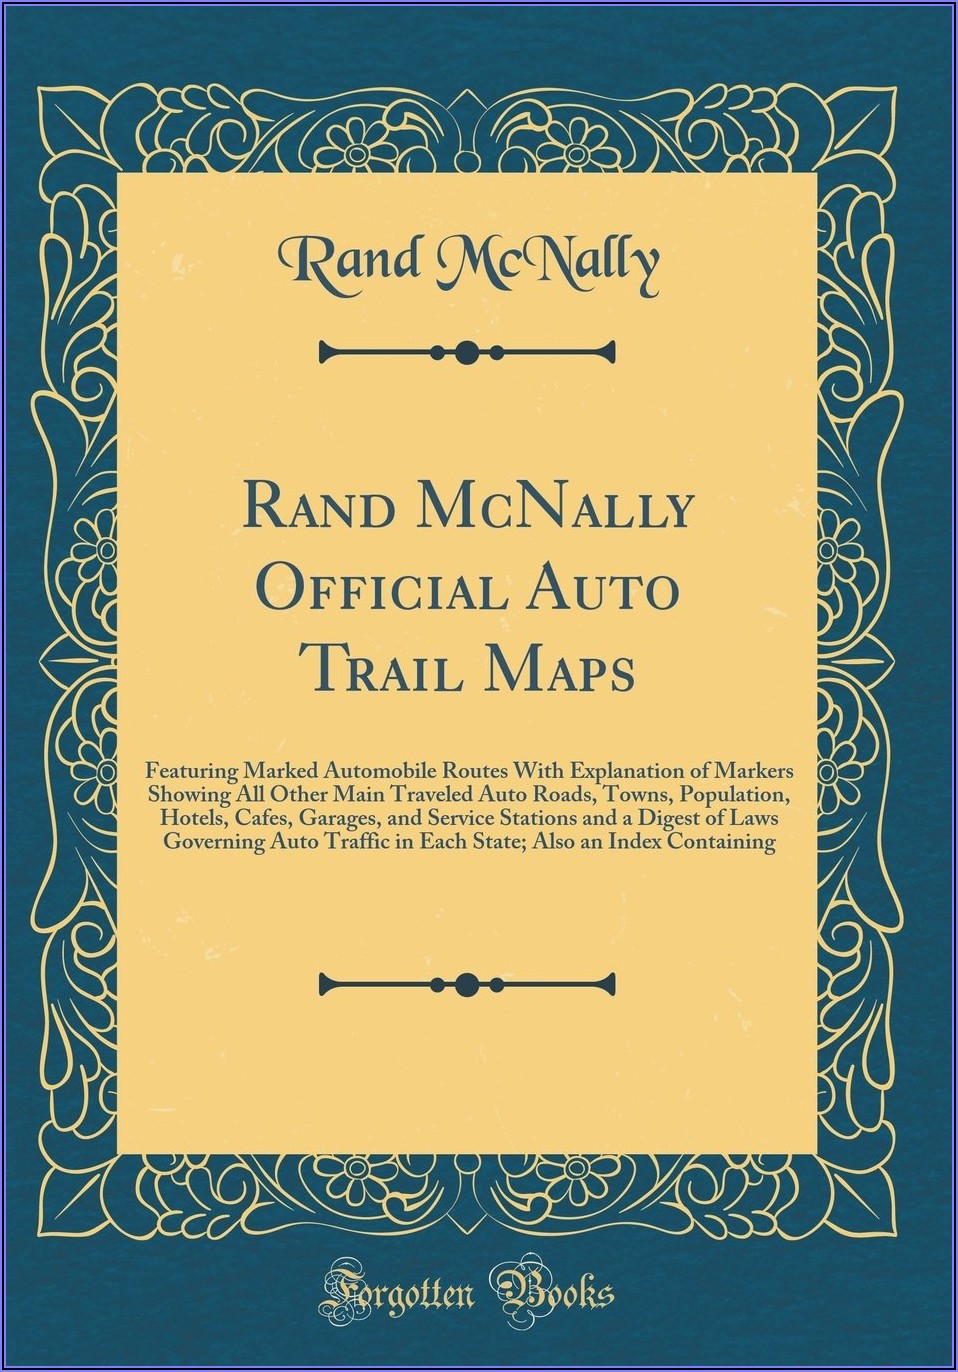 Where Can I Buy Rand Mcnally Maps